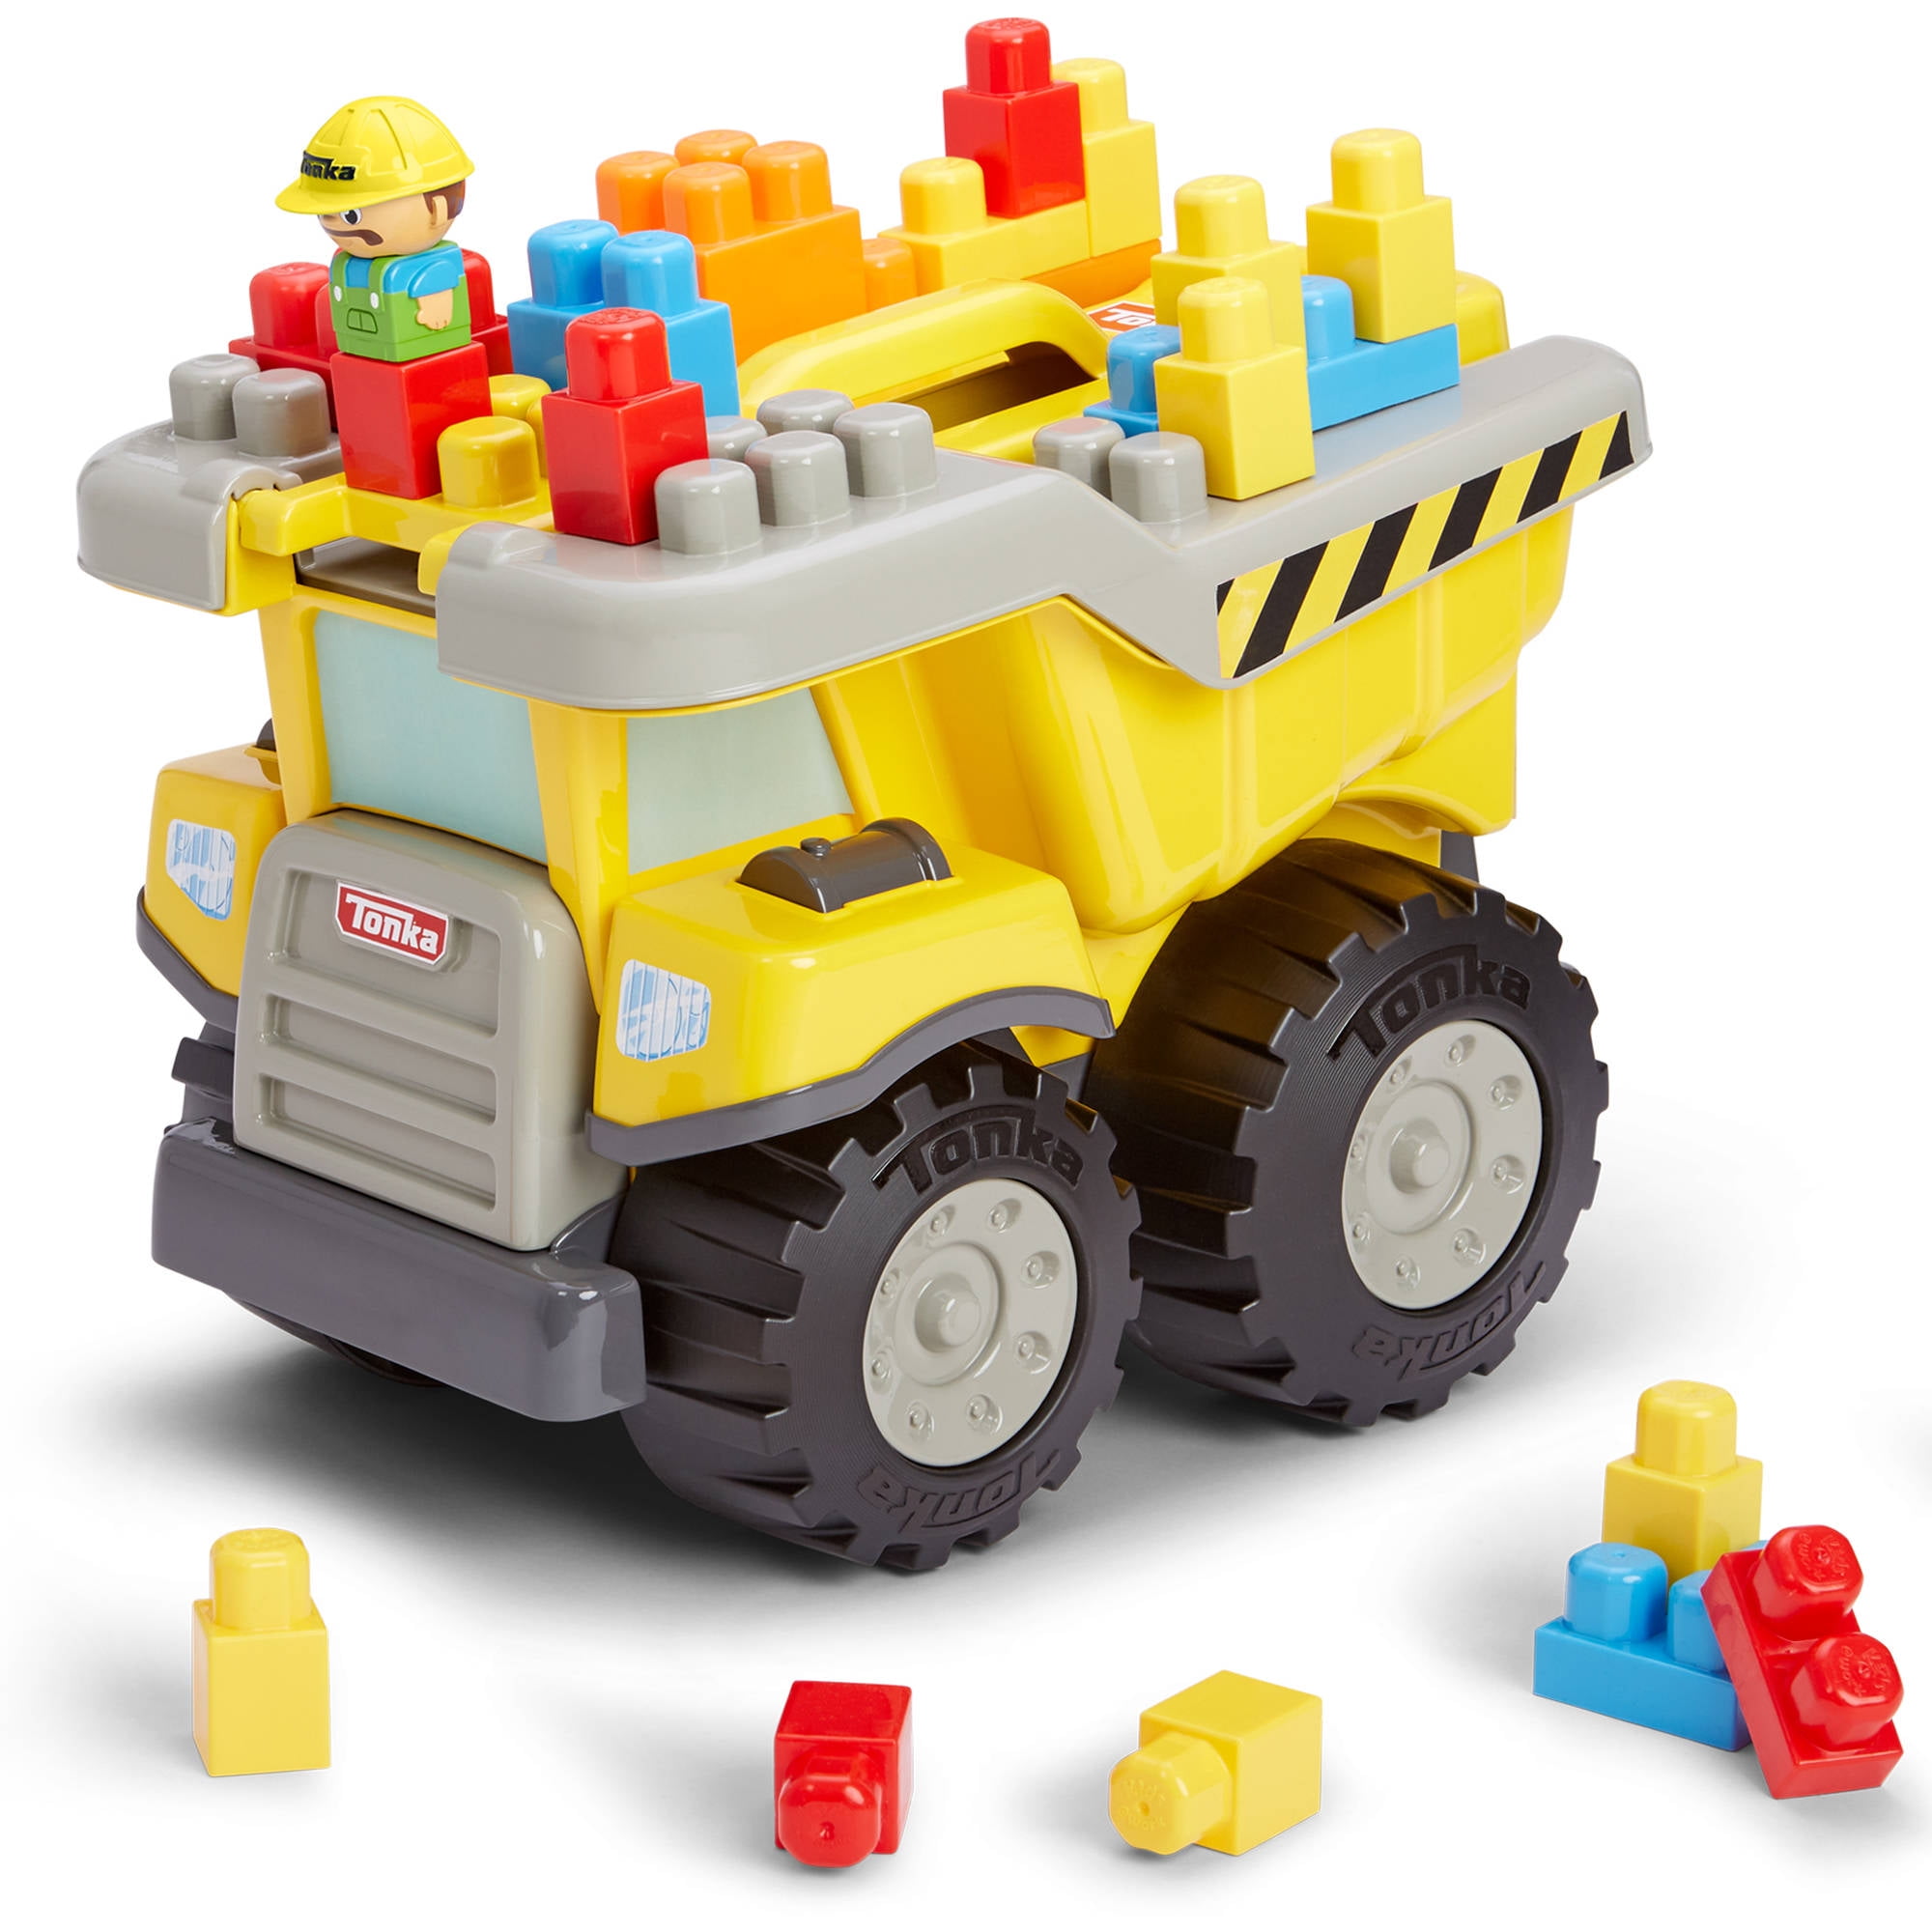 LEGOS CONSTRUCTIO AGES 2-5 12 PIECES BRAND NEW HASBORO TONKA MIGHTY BUILDERS 